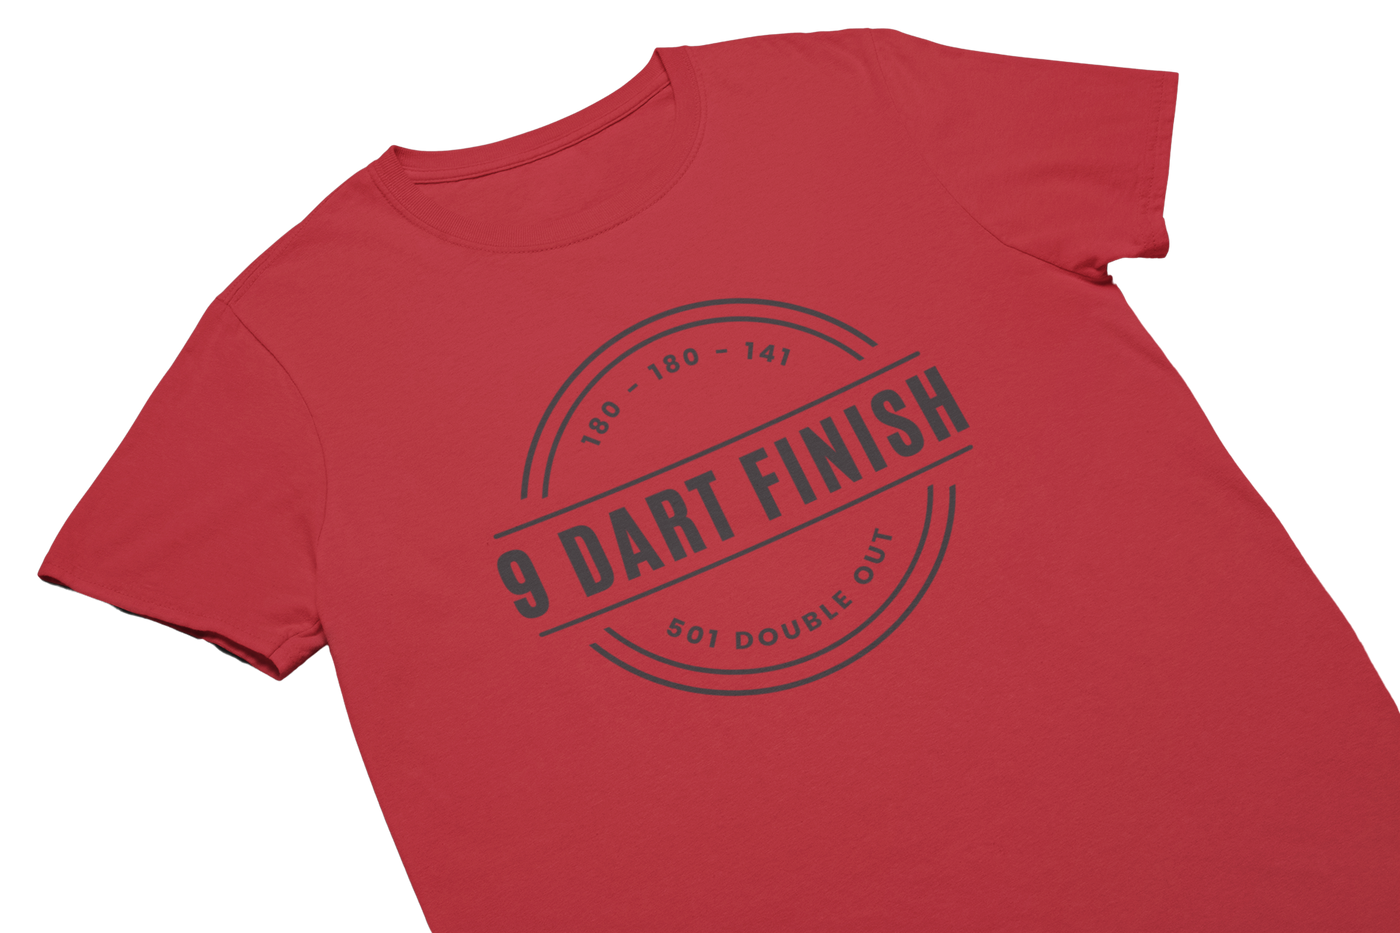 9 DART FINISH (Schwarzes Logo) - T-Shirt Rot